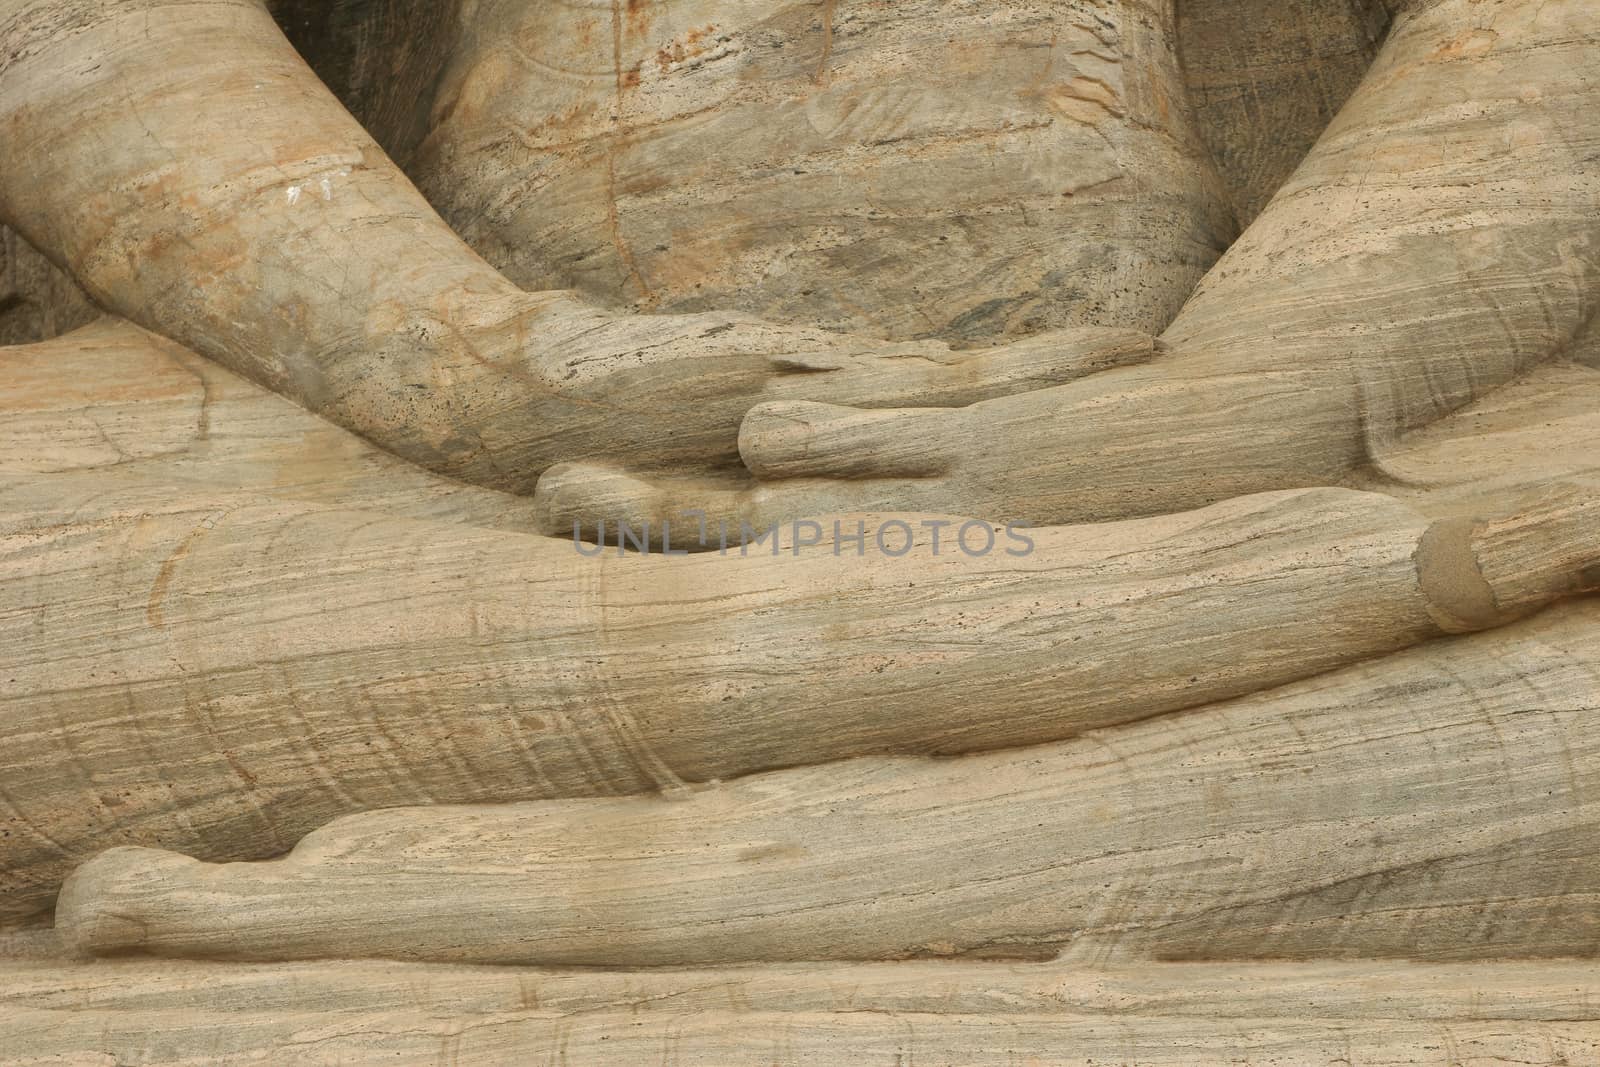 Polonnaruwa Sri Lanka Ancient ruins Statue sitting of Buddha in lotus position by kgboxford